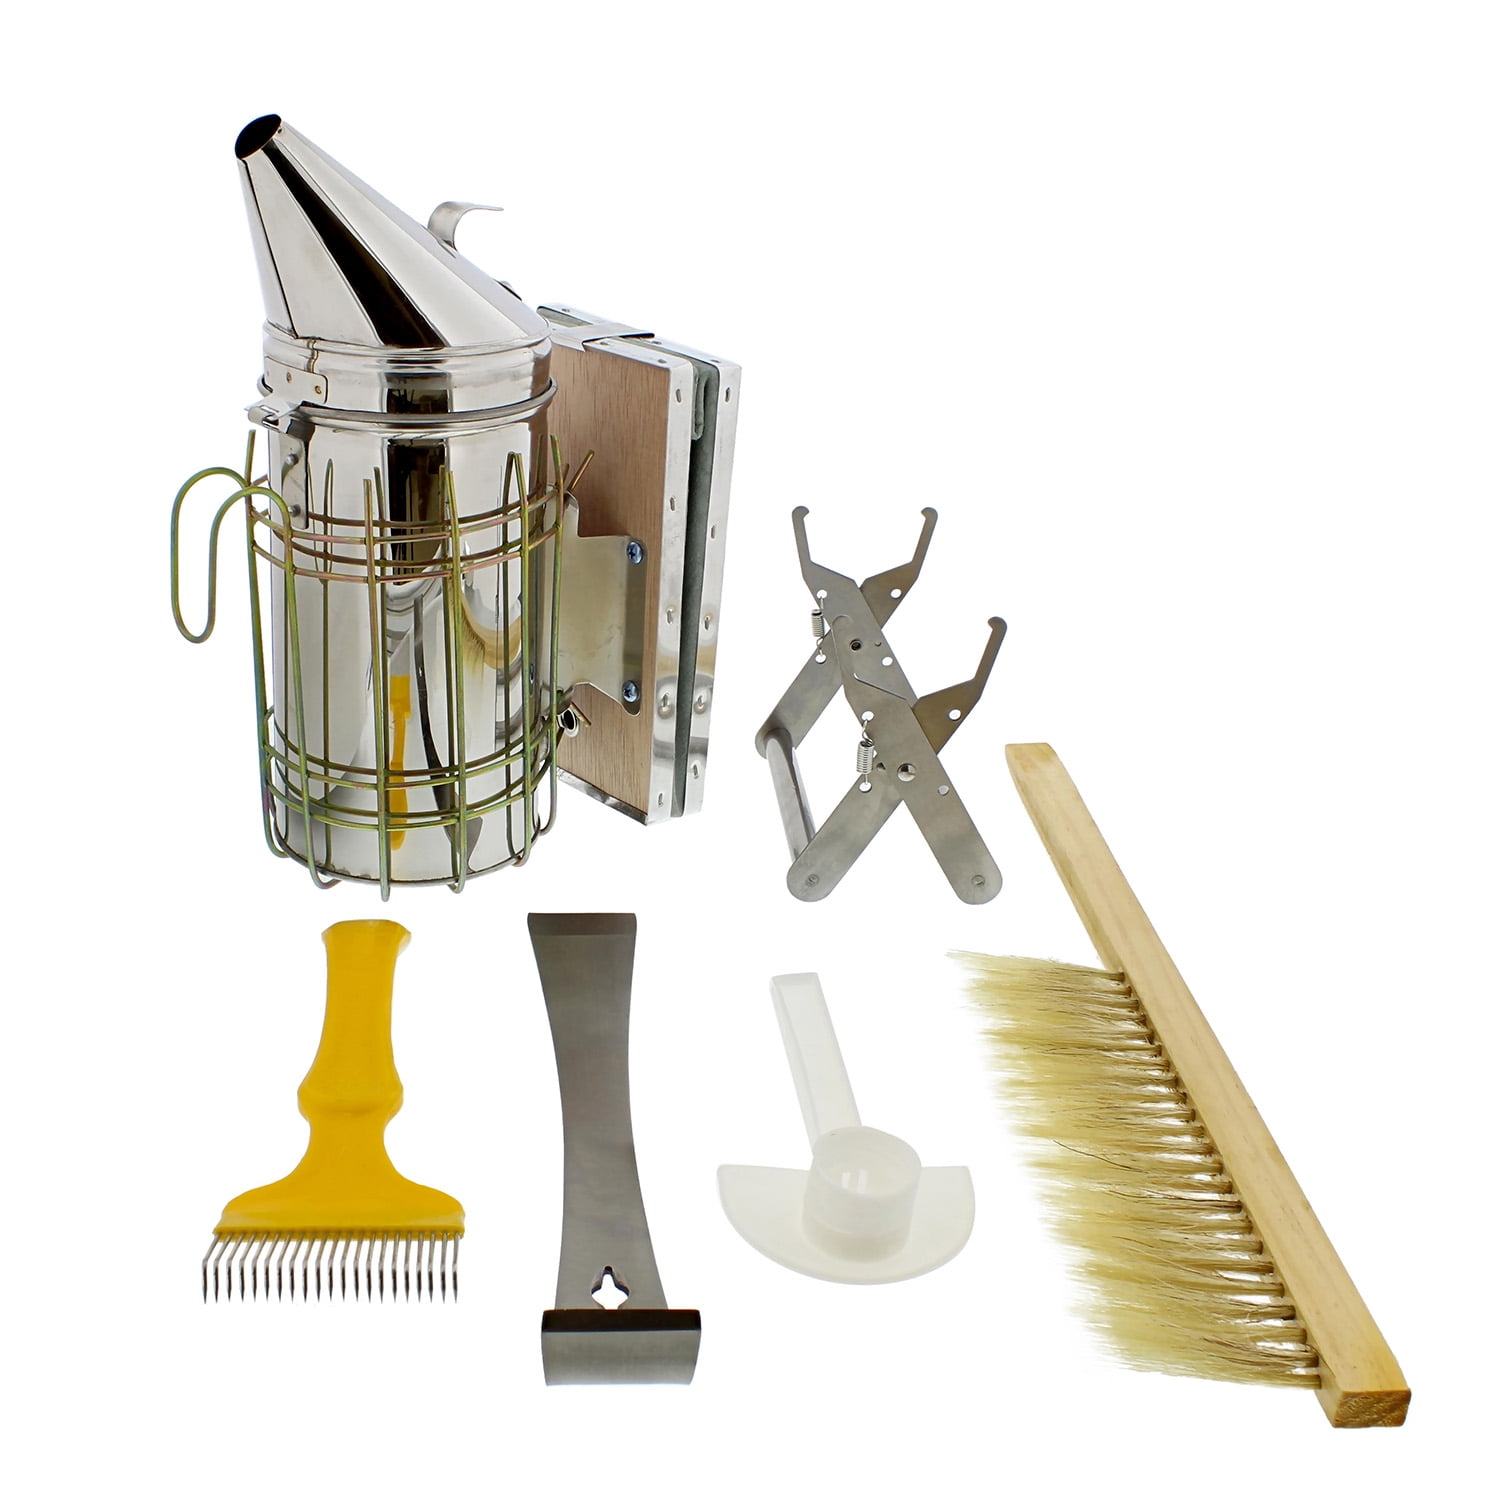 LTLR Beekeeping Supplies Honey Tools Starter Kit Set of 10 Hive Smoker Equipment 